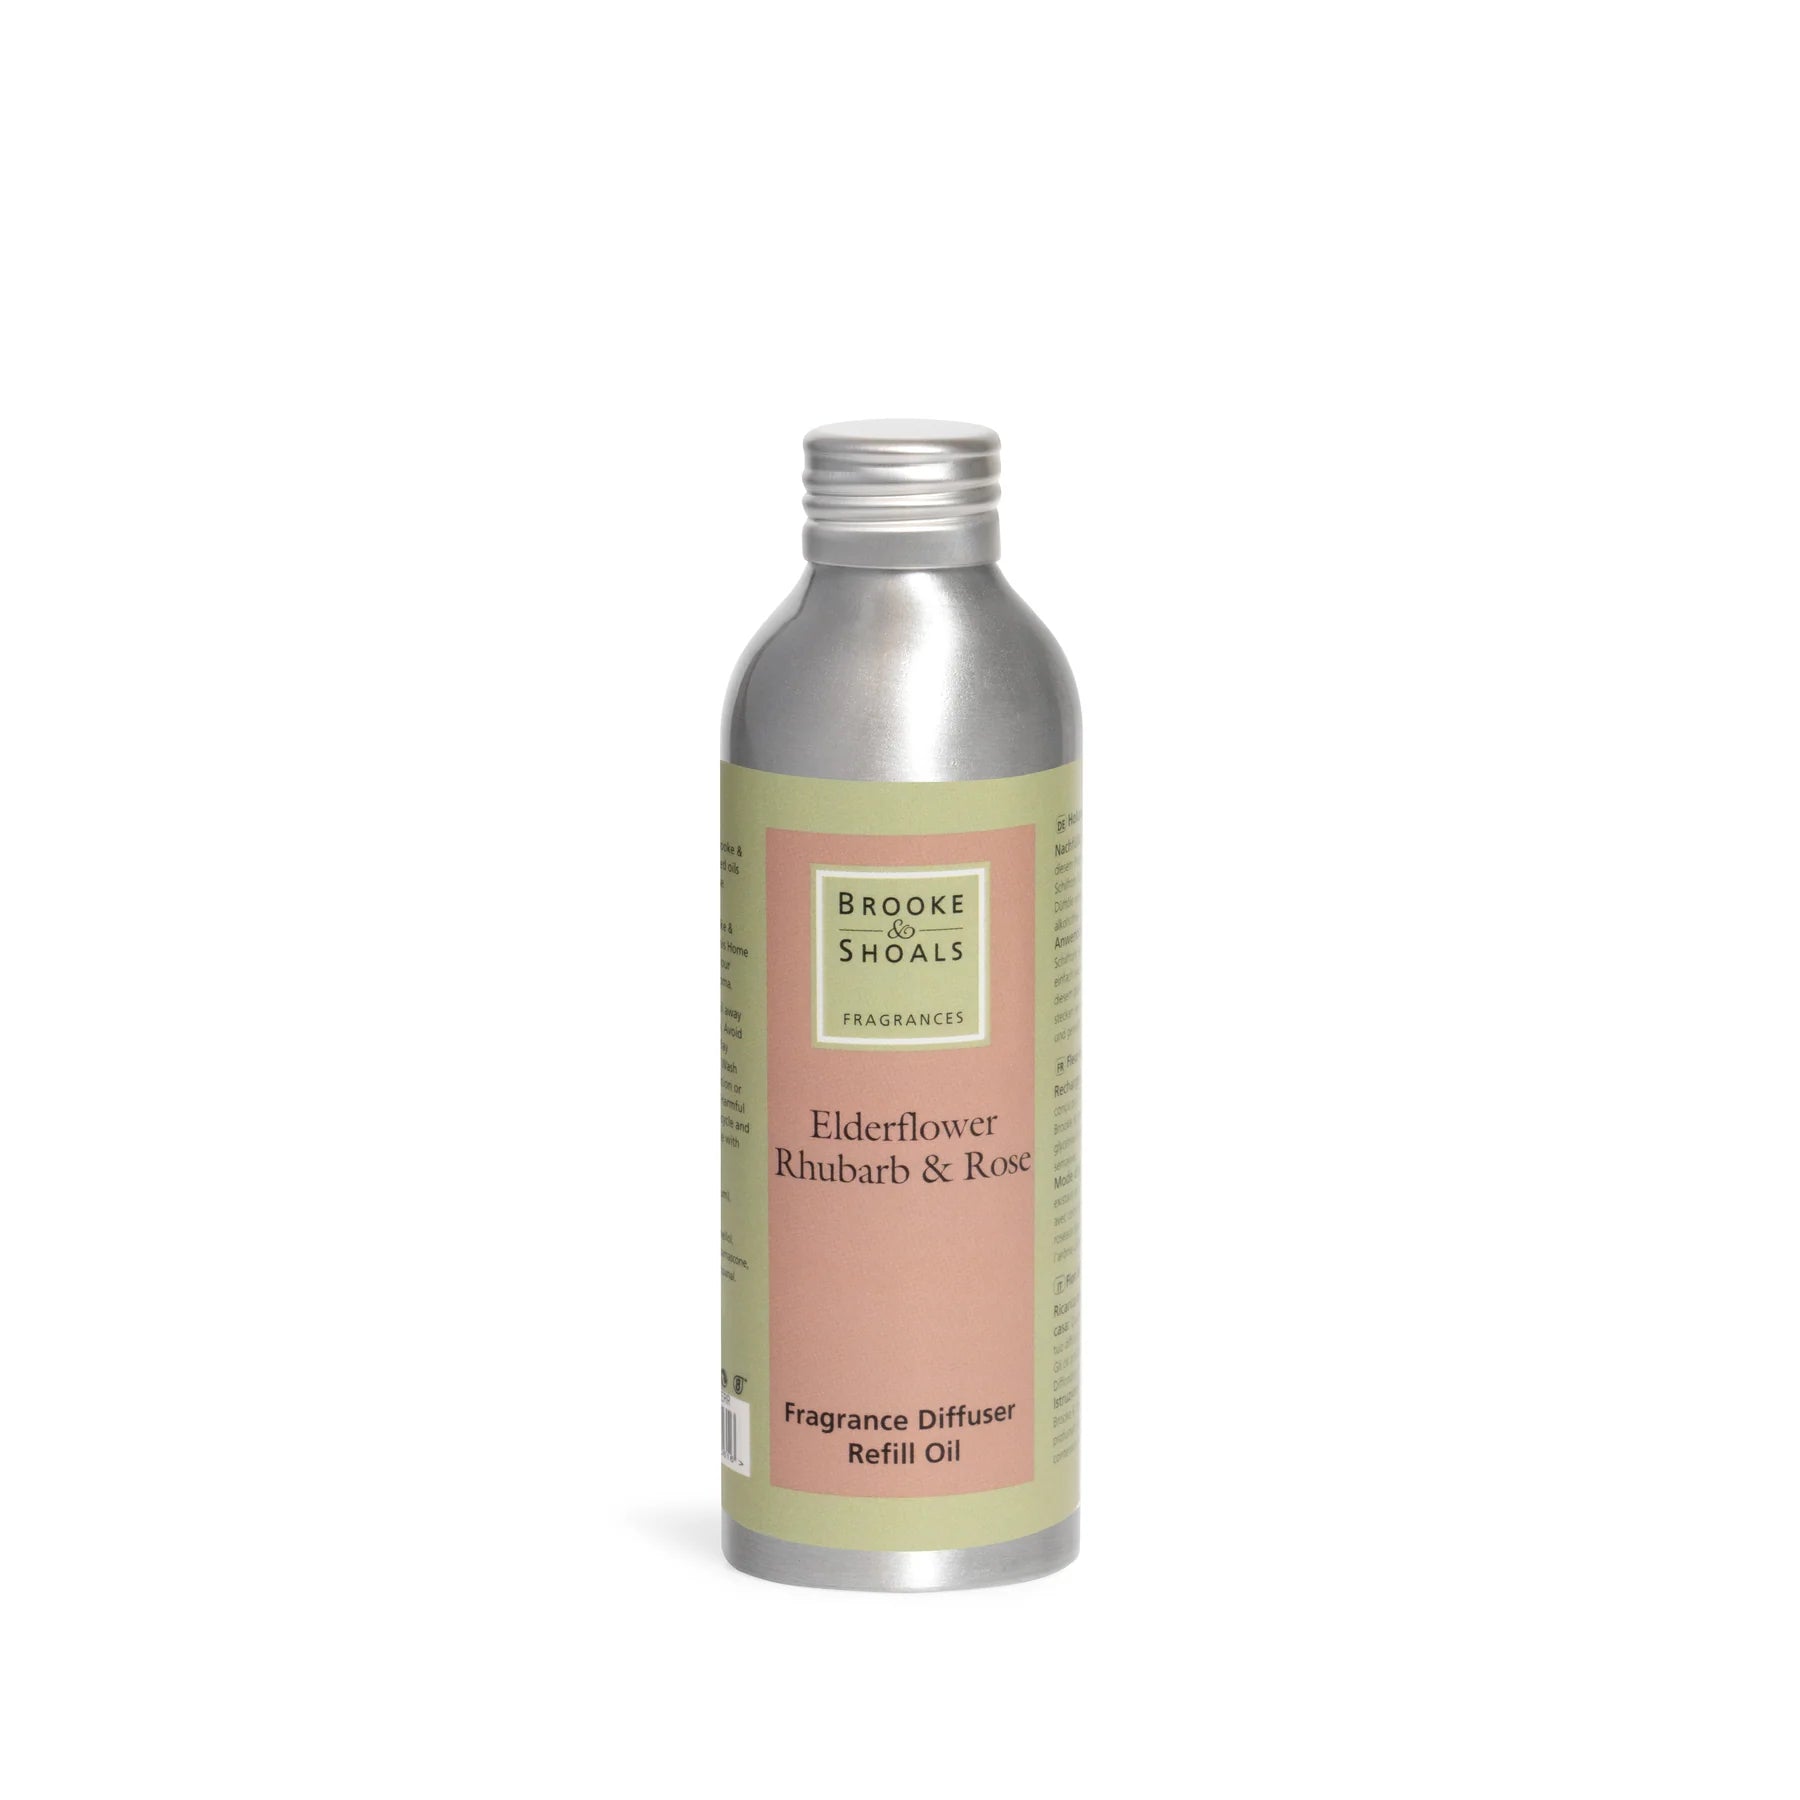 Brooke & Shoals Fragrance Diffuser Refill Oils - Elderflower Rhubarb & Rose